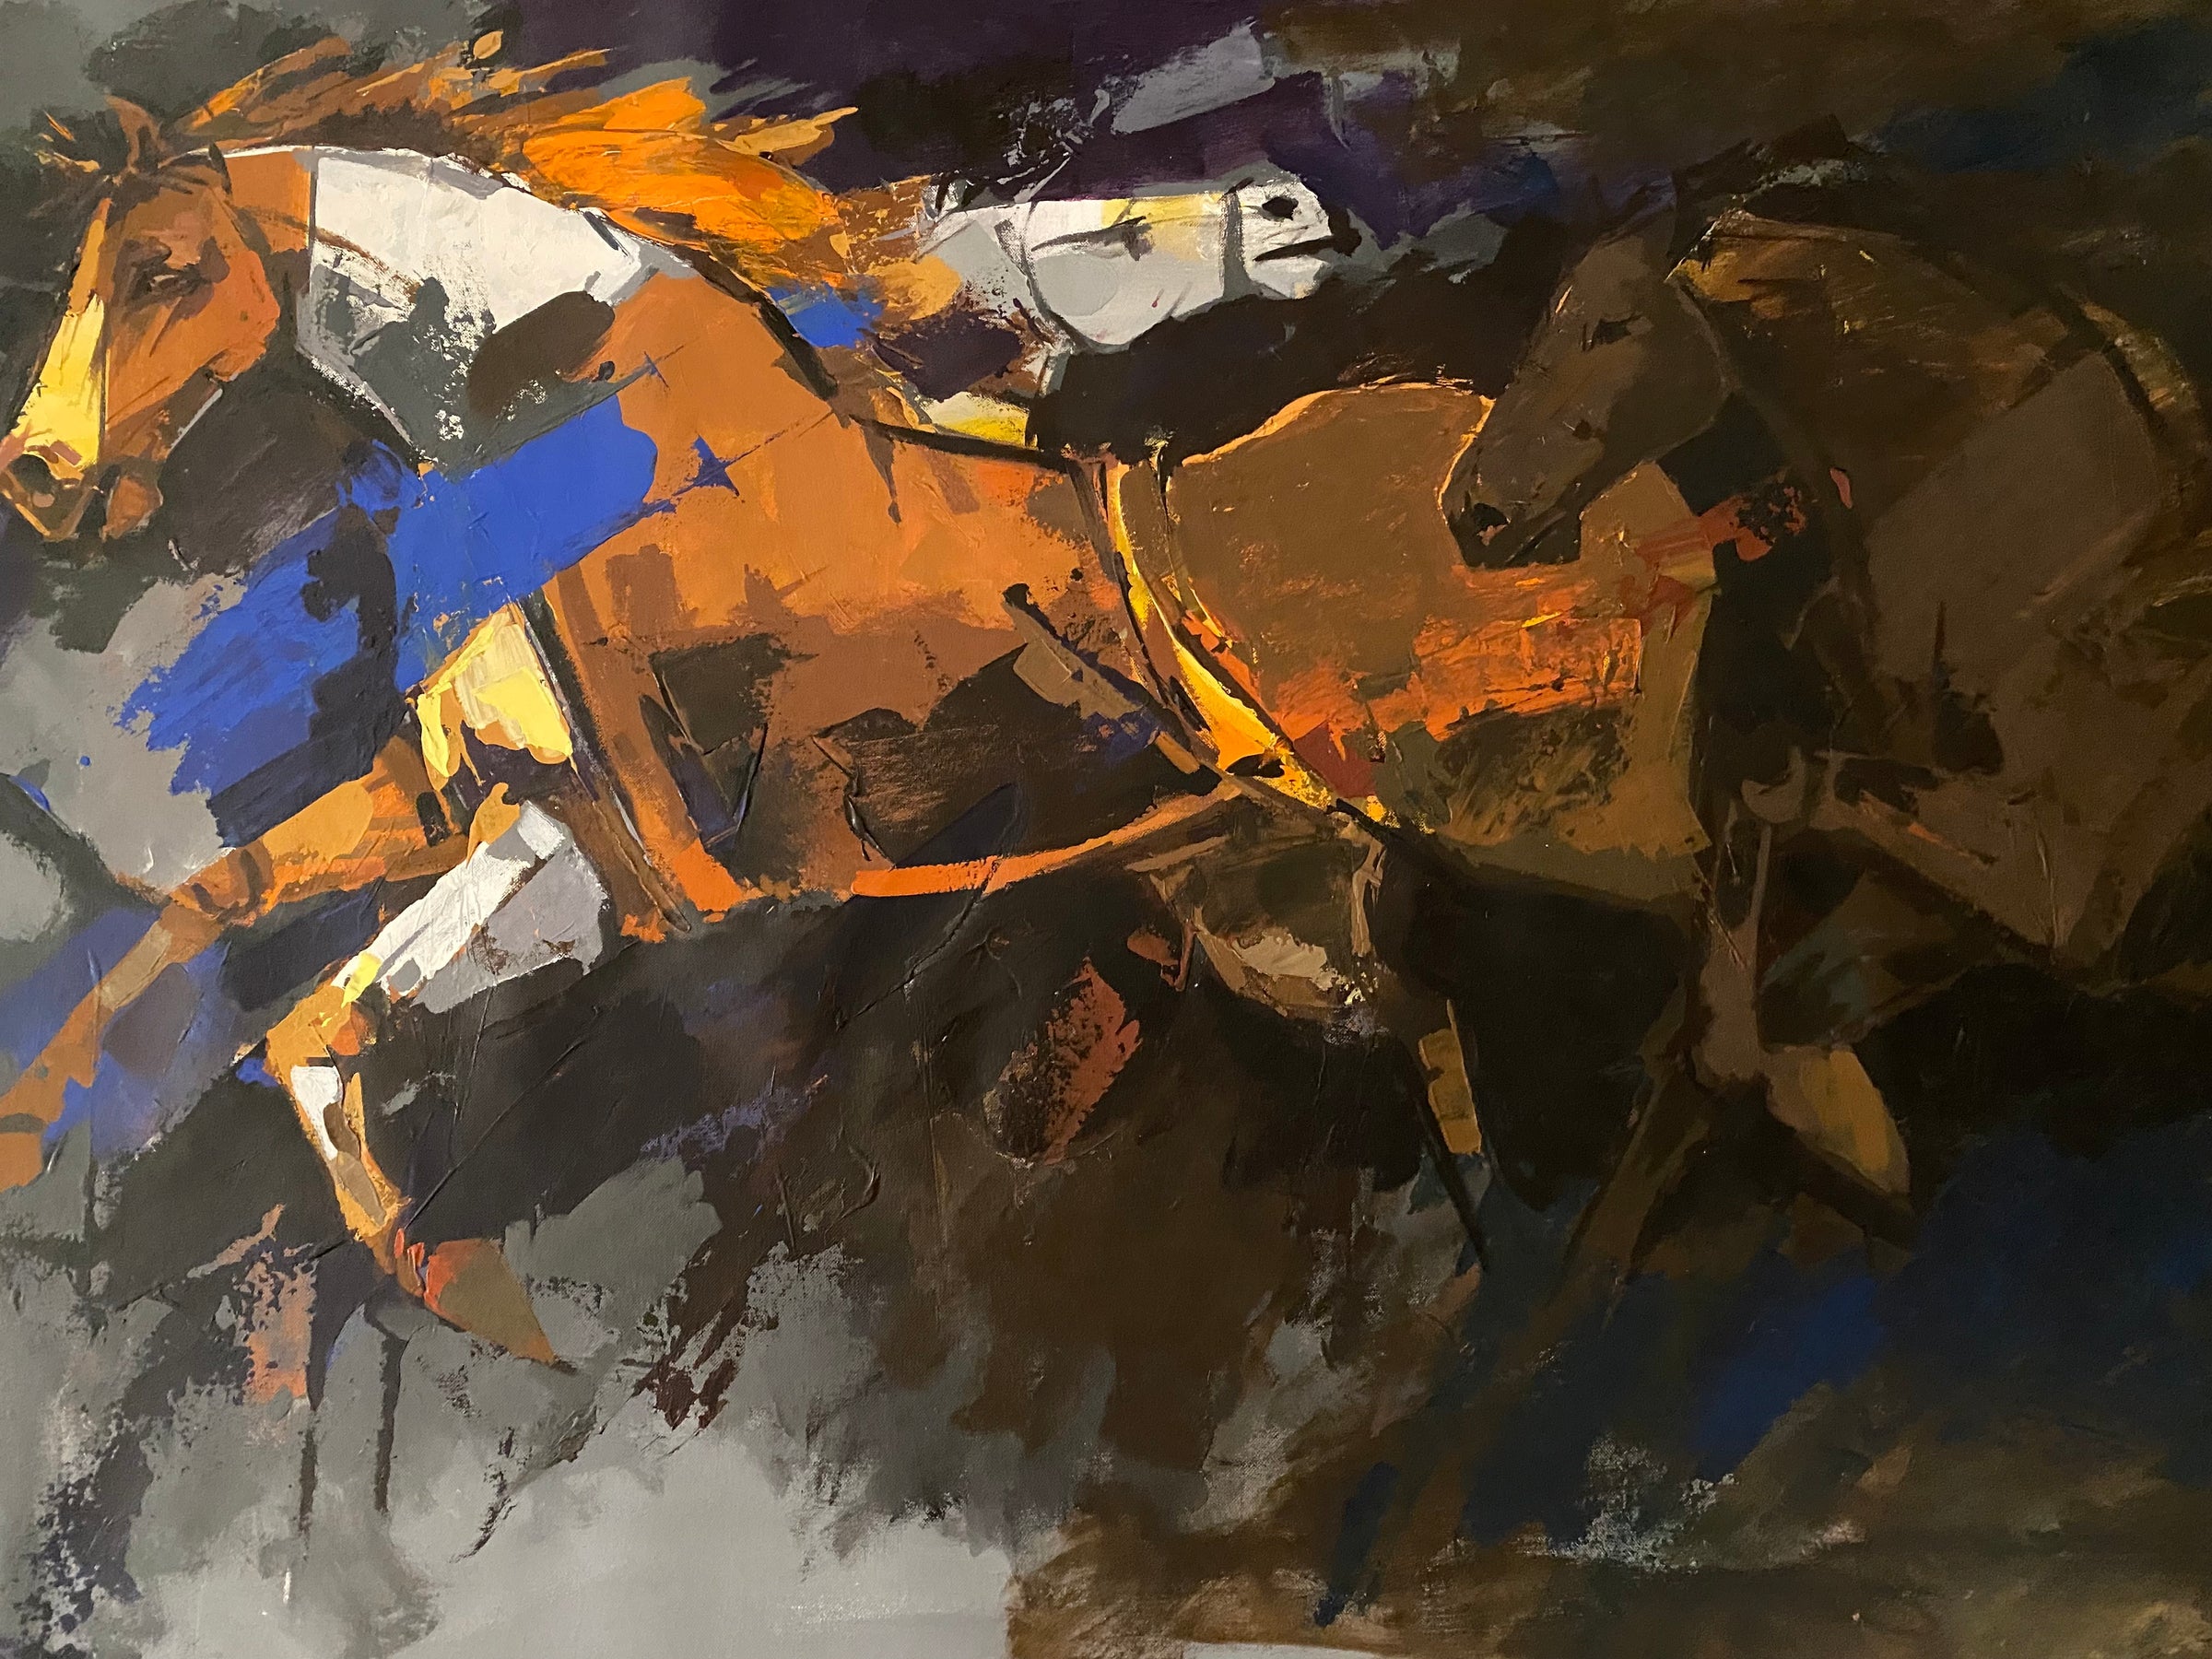 HORSES 20 by P.R Rathod | Acrylic painting on Canvas - Home Decor